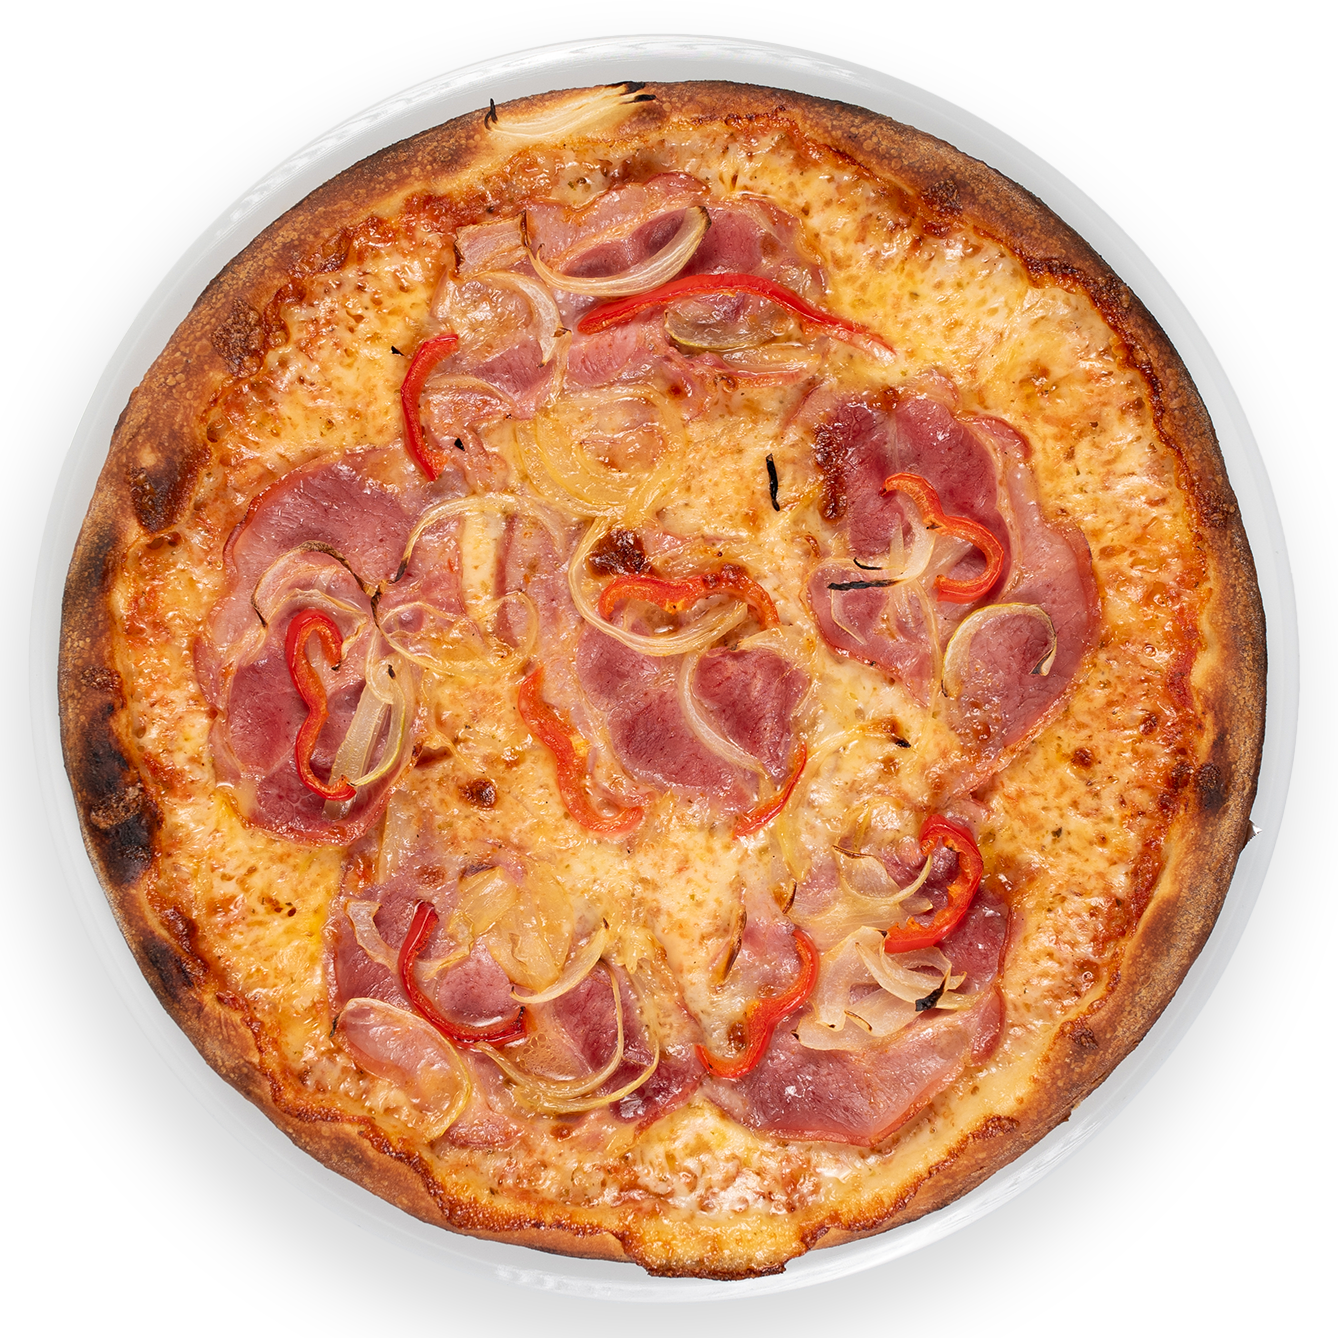 Pizza Traditionala 550g